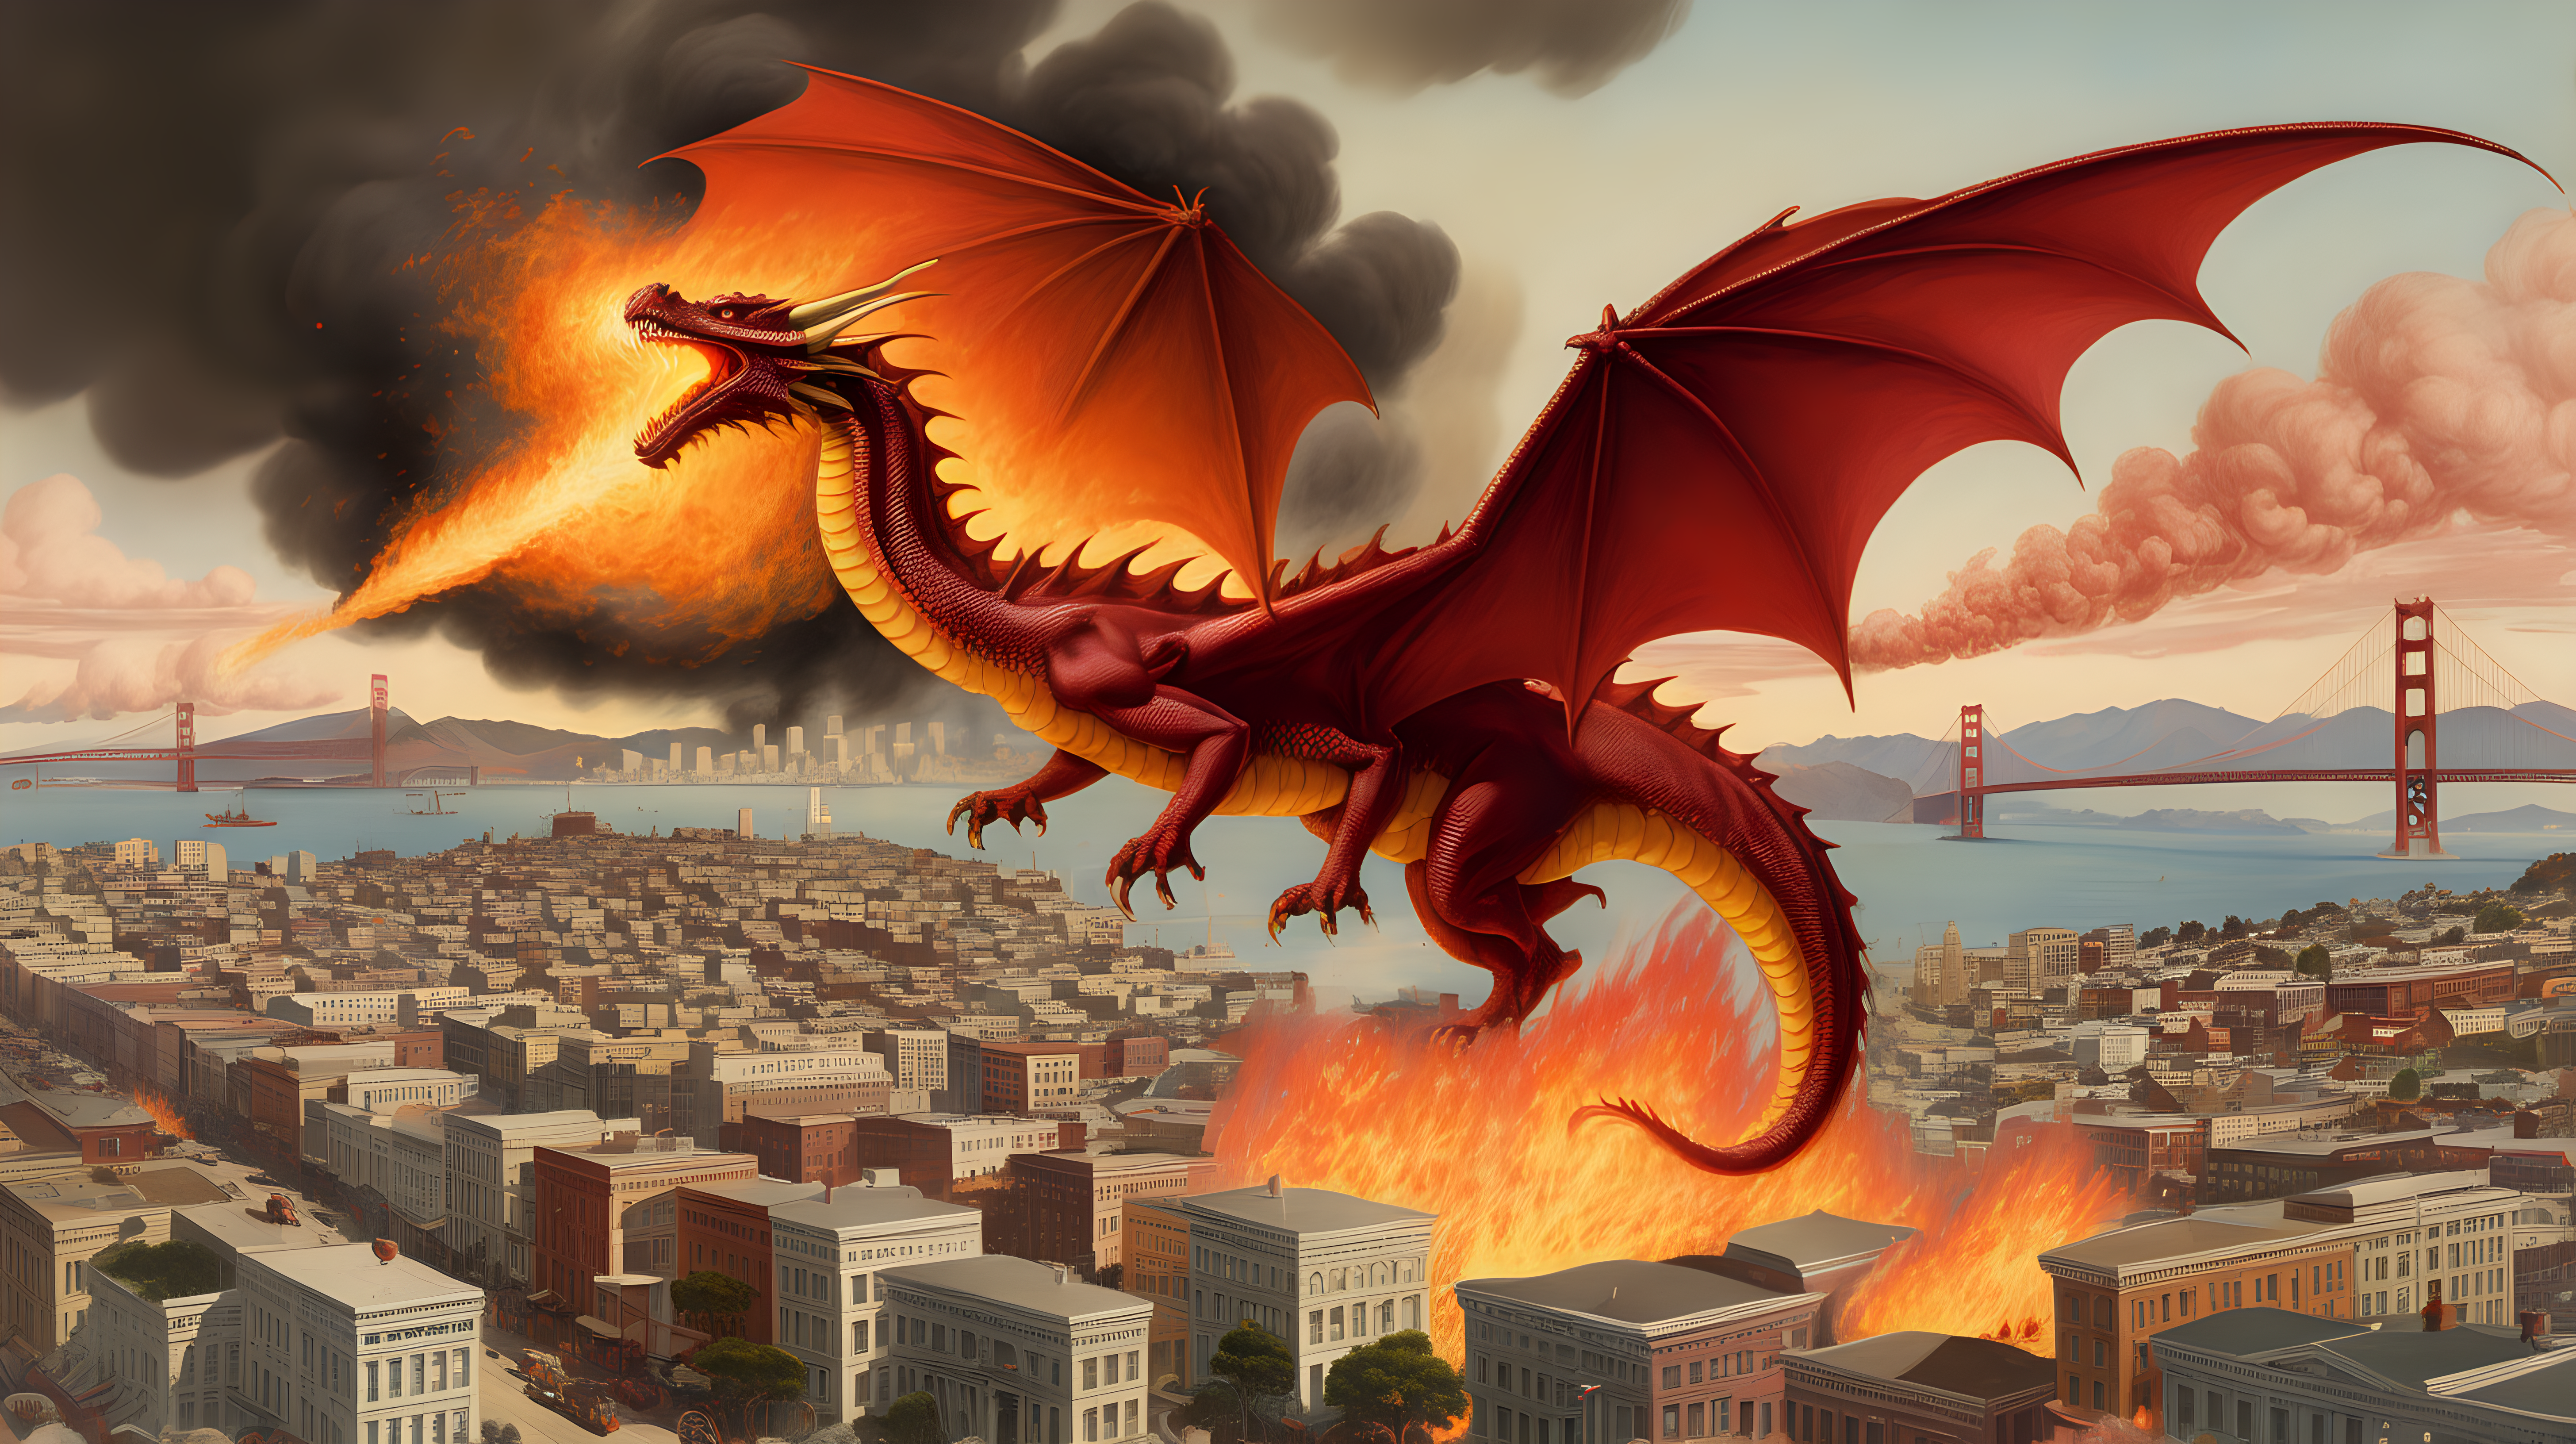 fire breathing dragon destroying 1900's San Francisco